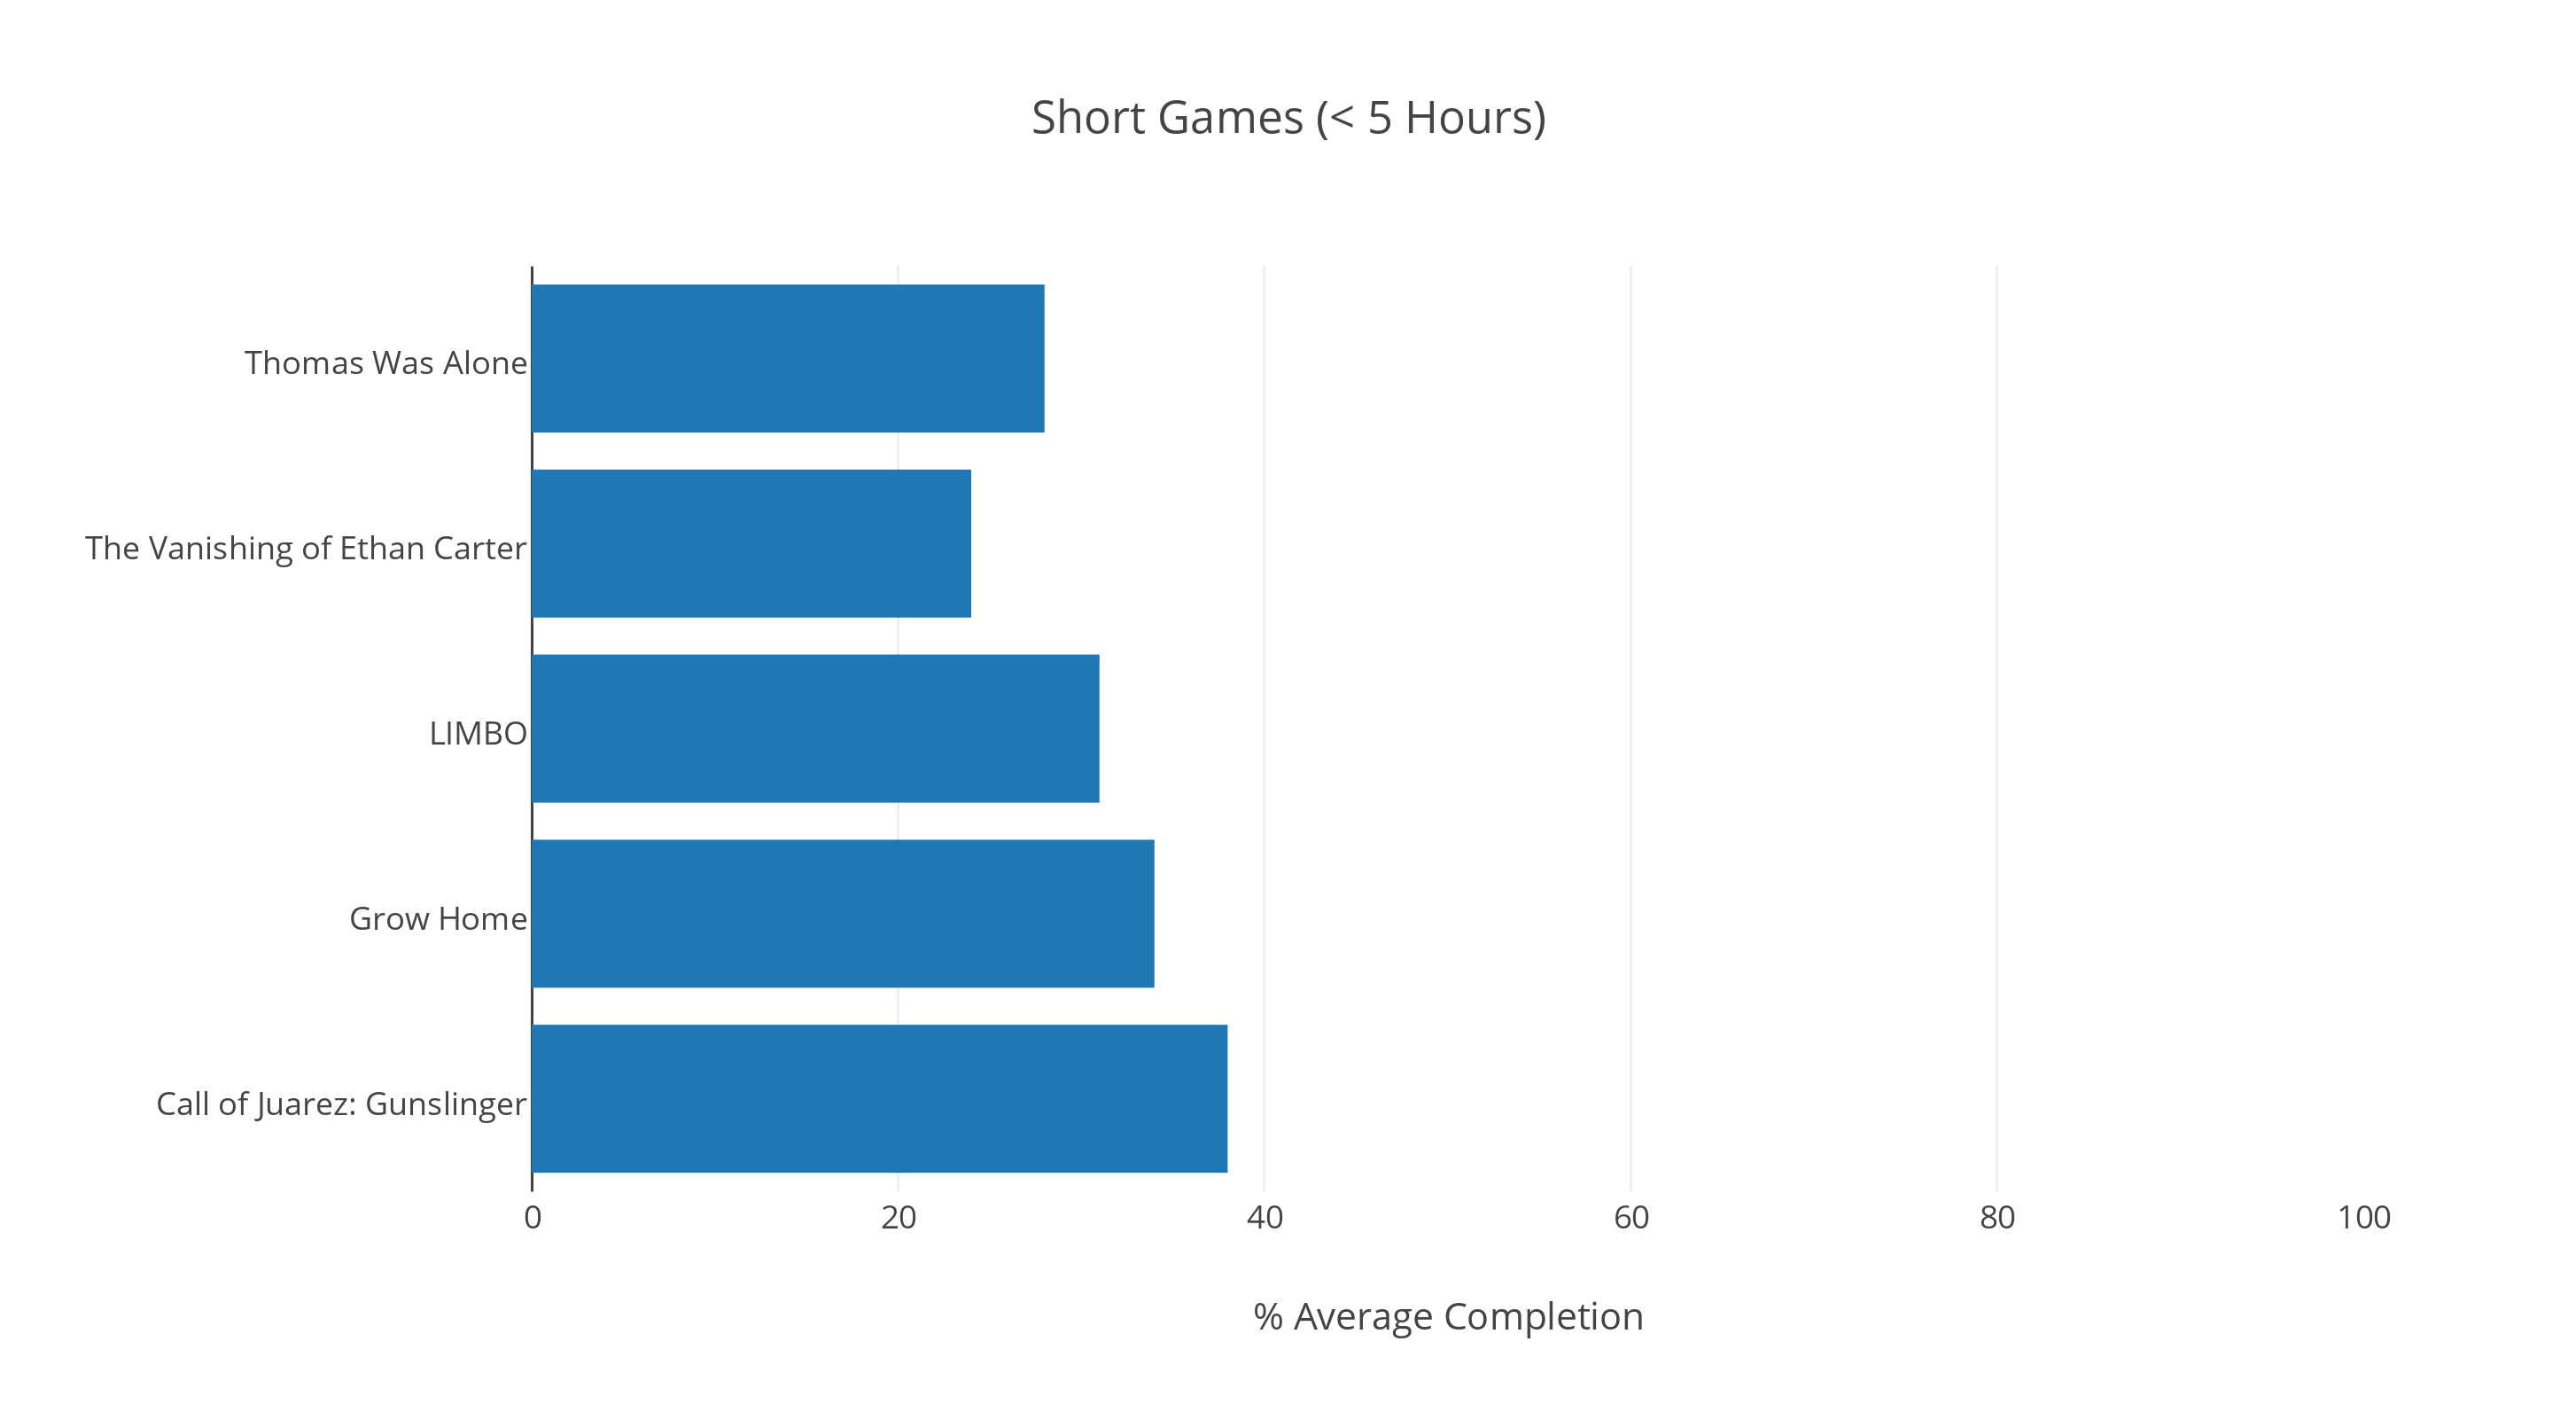 Short Games (- 5 Hours)